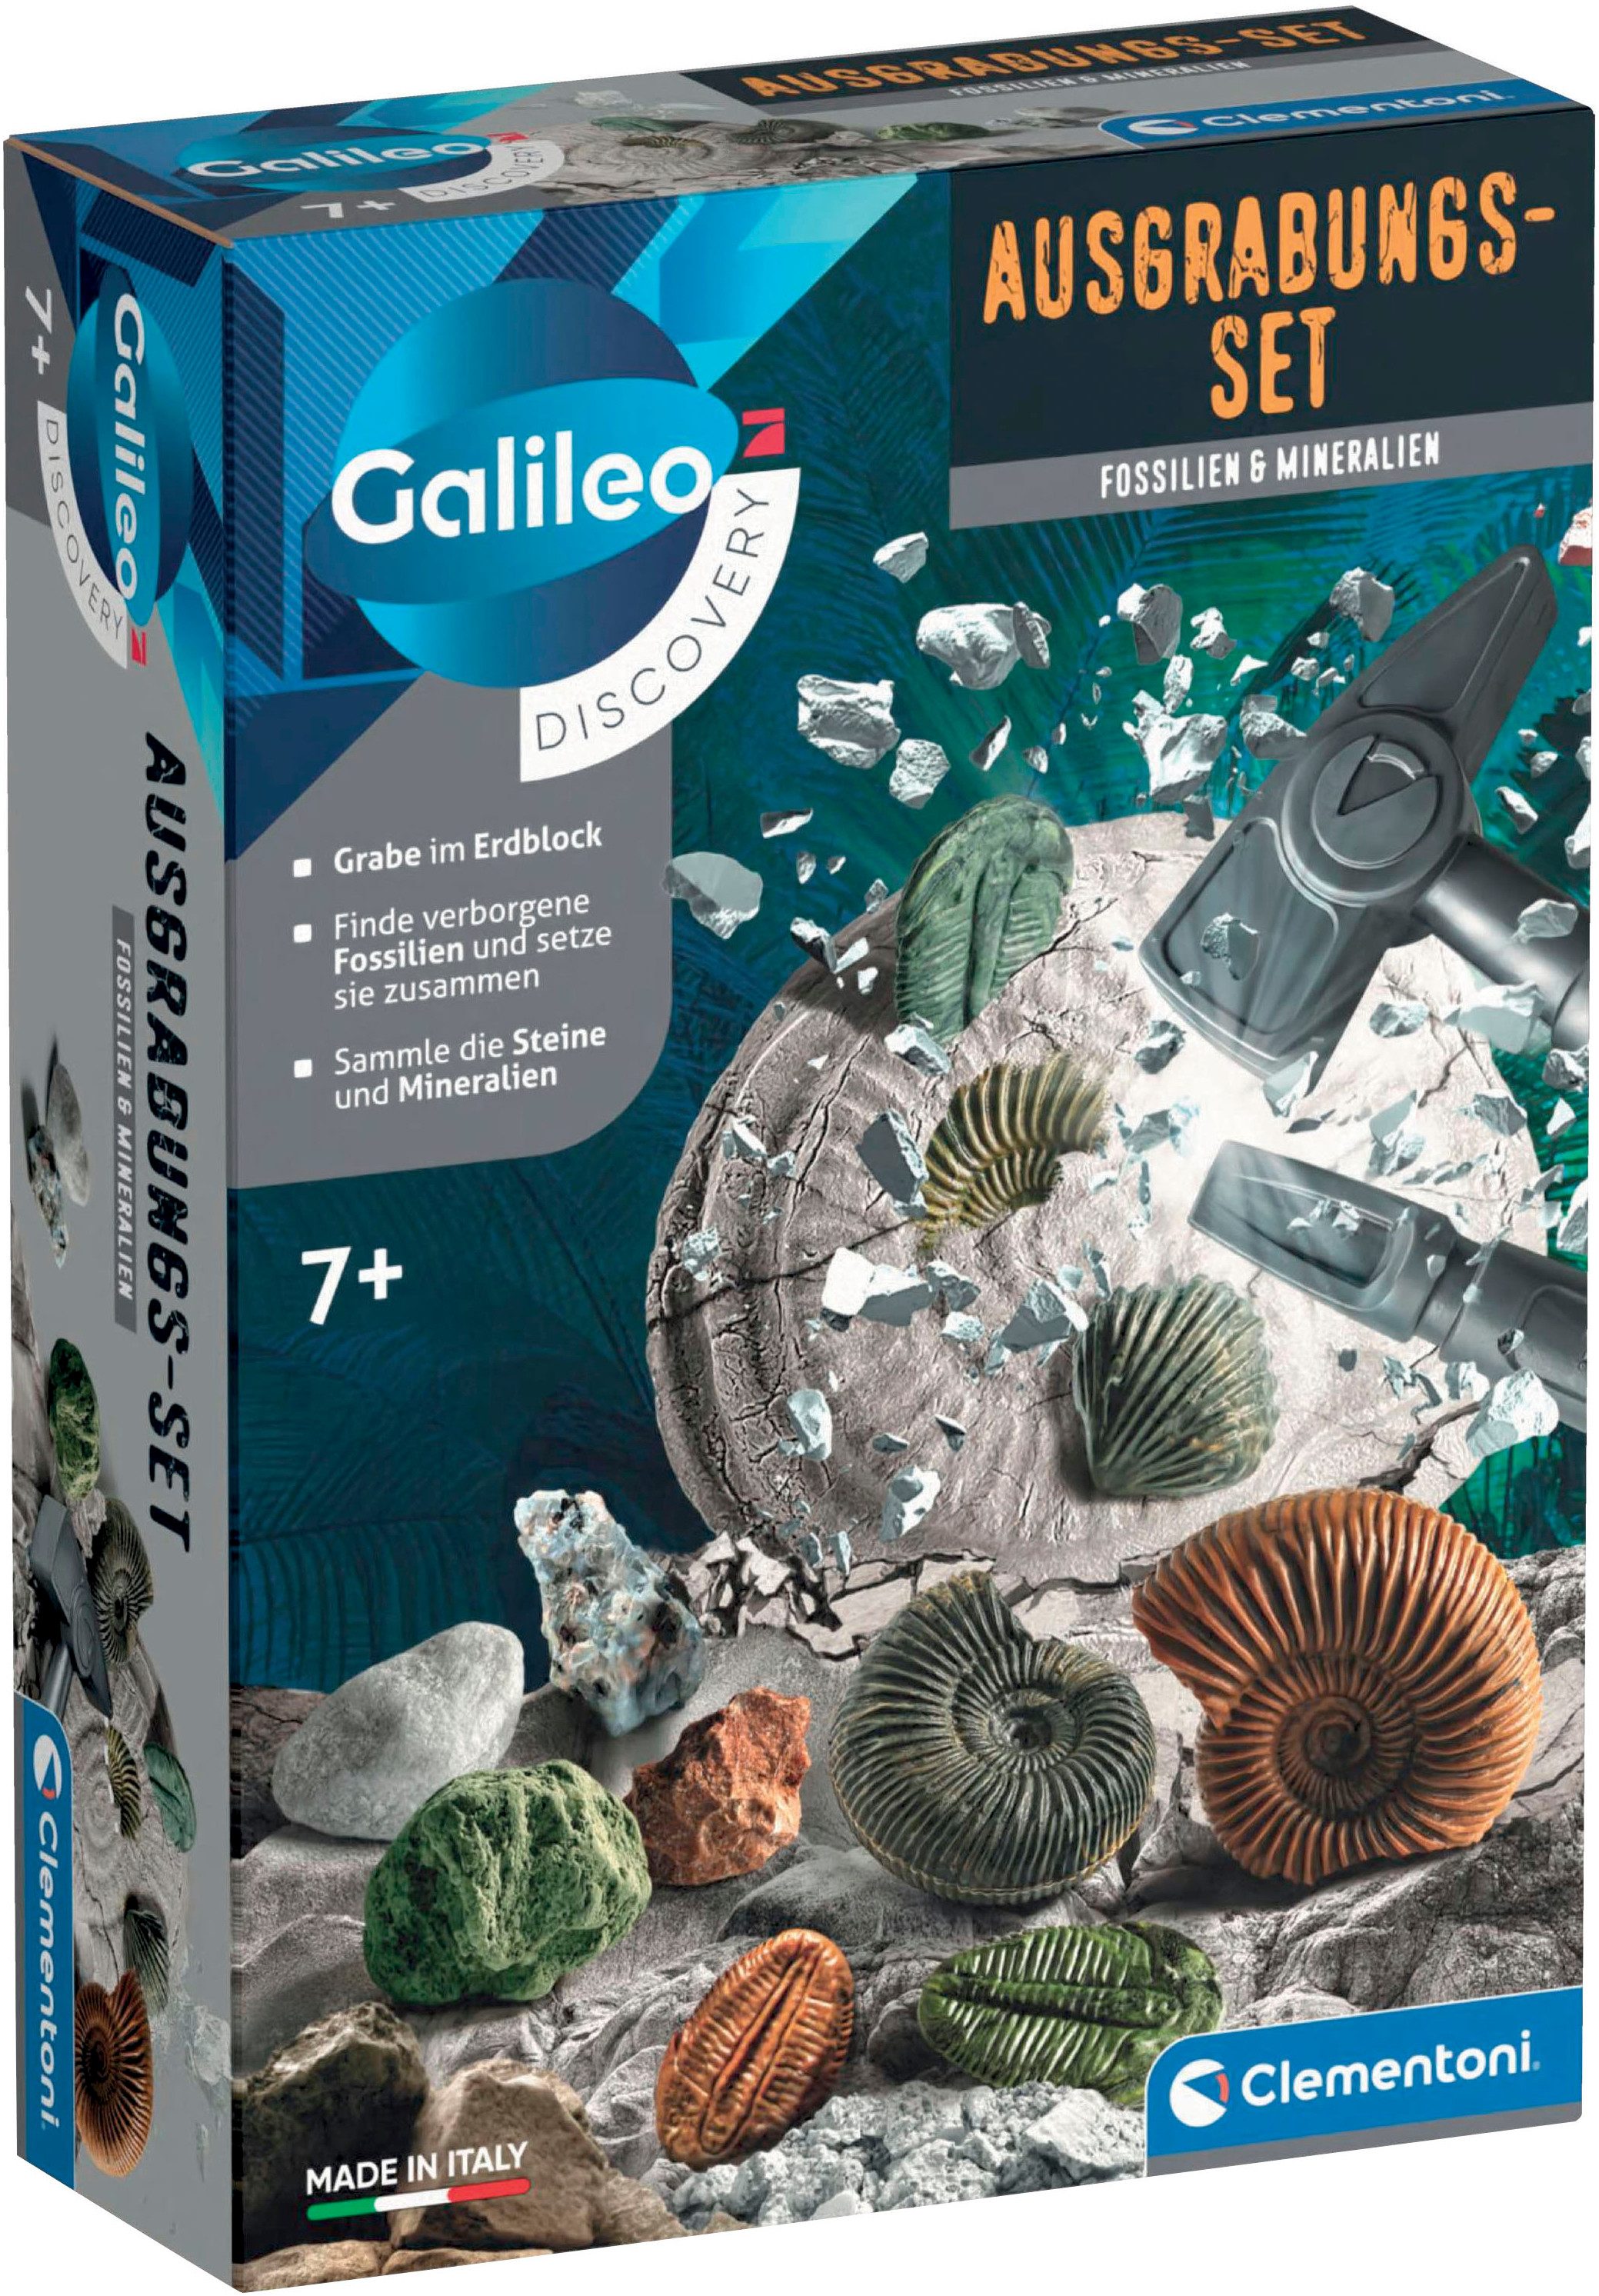 Clementoni® Experimentierkasten Galileo Discovery, Ausgrabungs-Set Fossilien & Mineralien, Made in Europe; FSC® - schützt Wald - weltweit